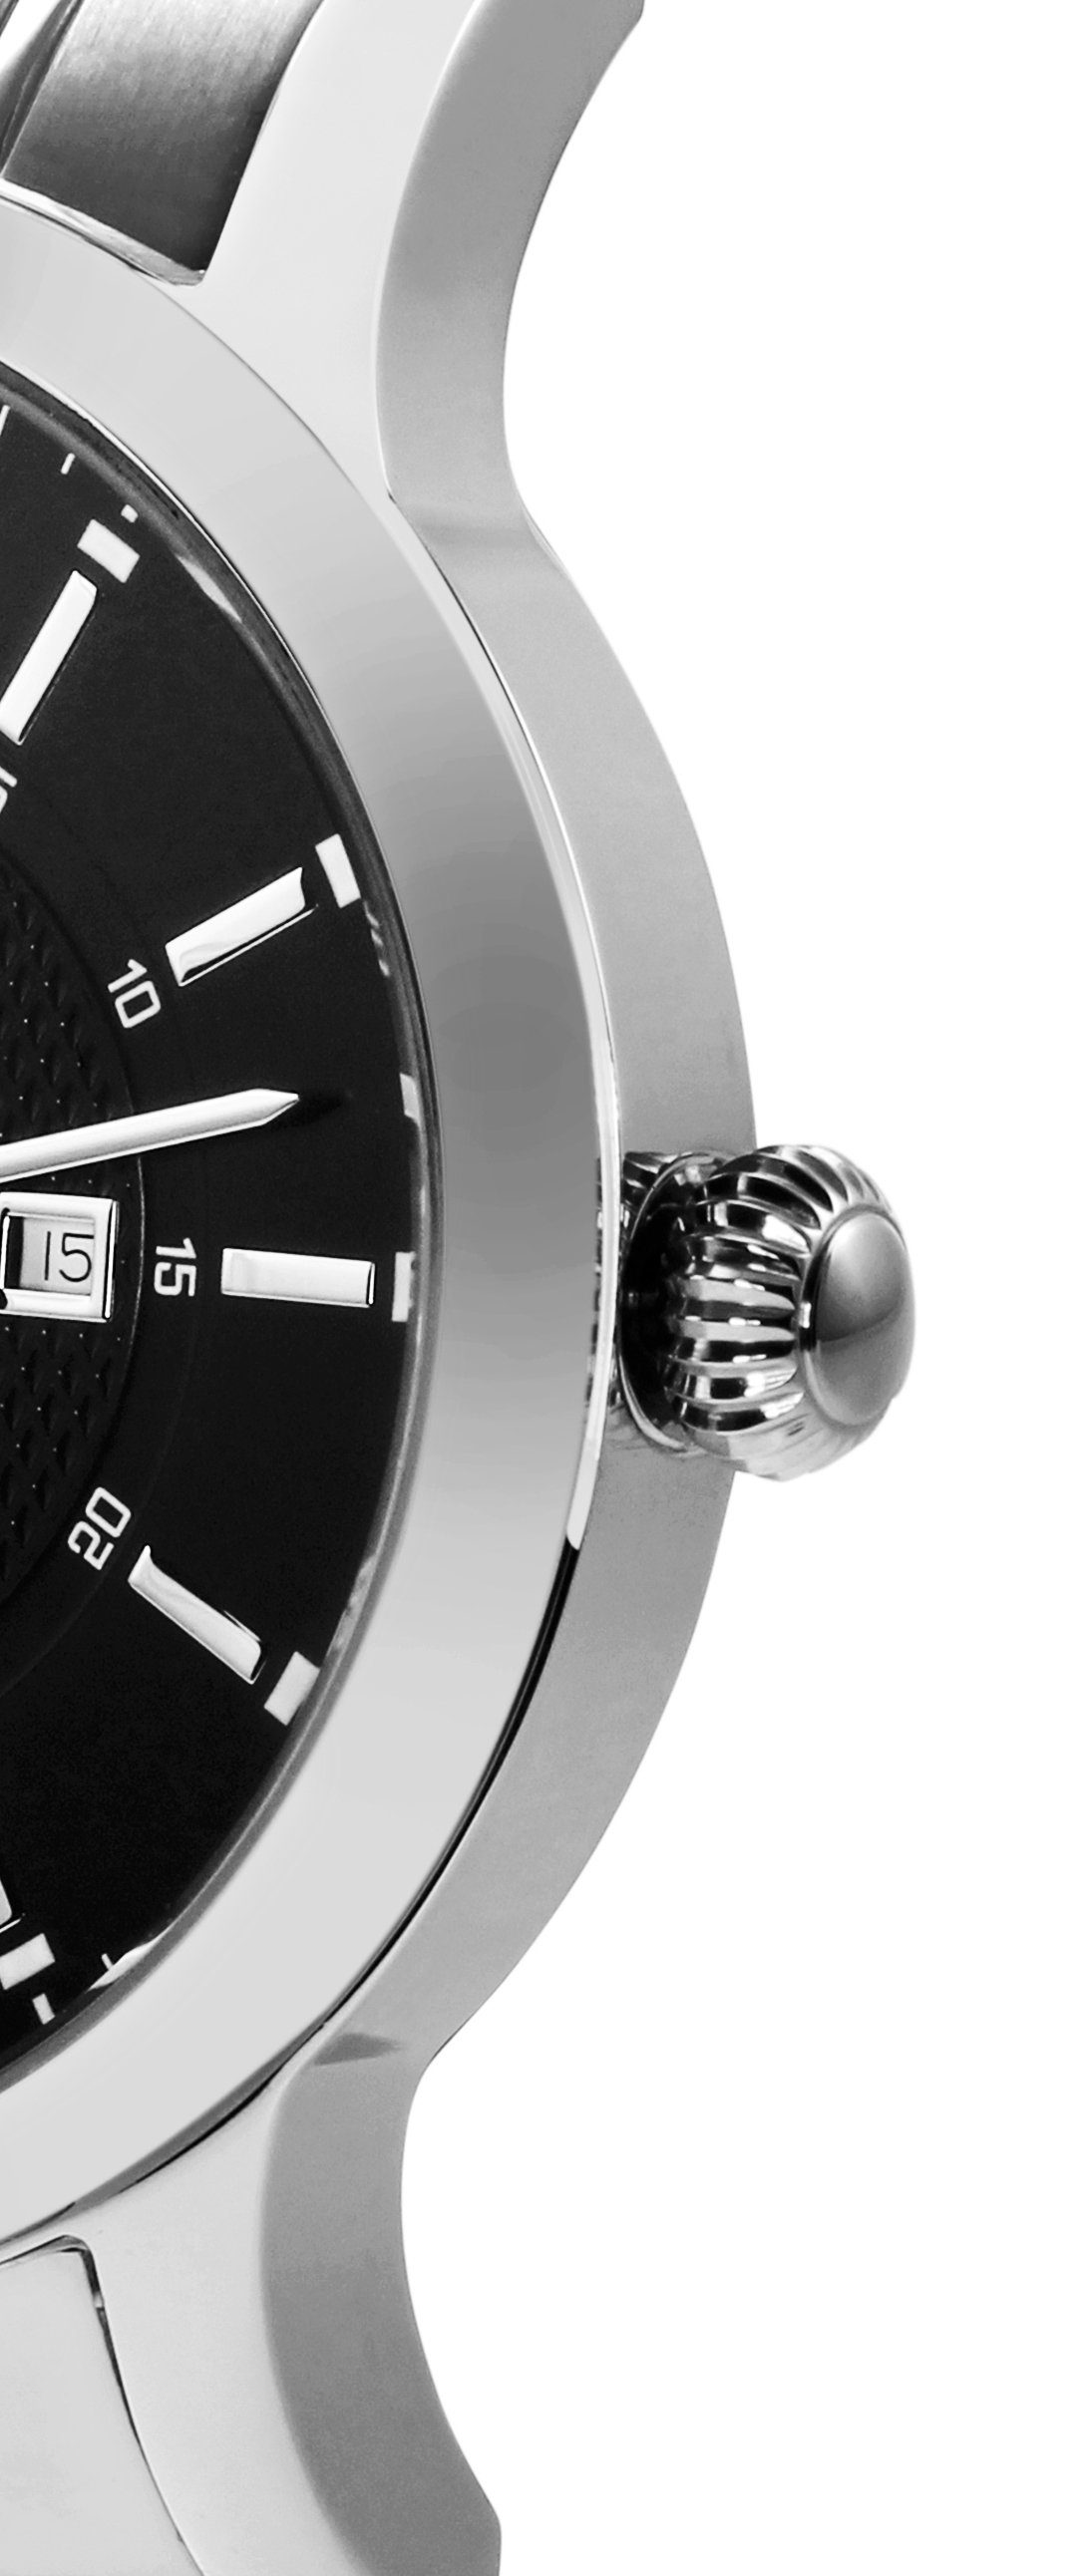 Uhr Lindberg&Sons und graziösem Quarzuhr mit elegantem Stil Armband